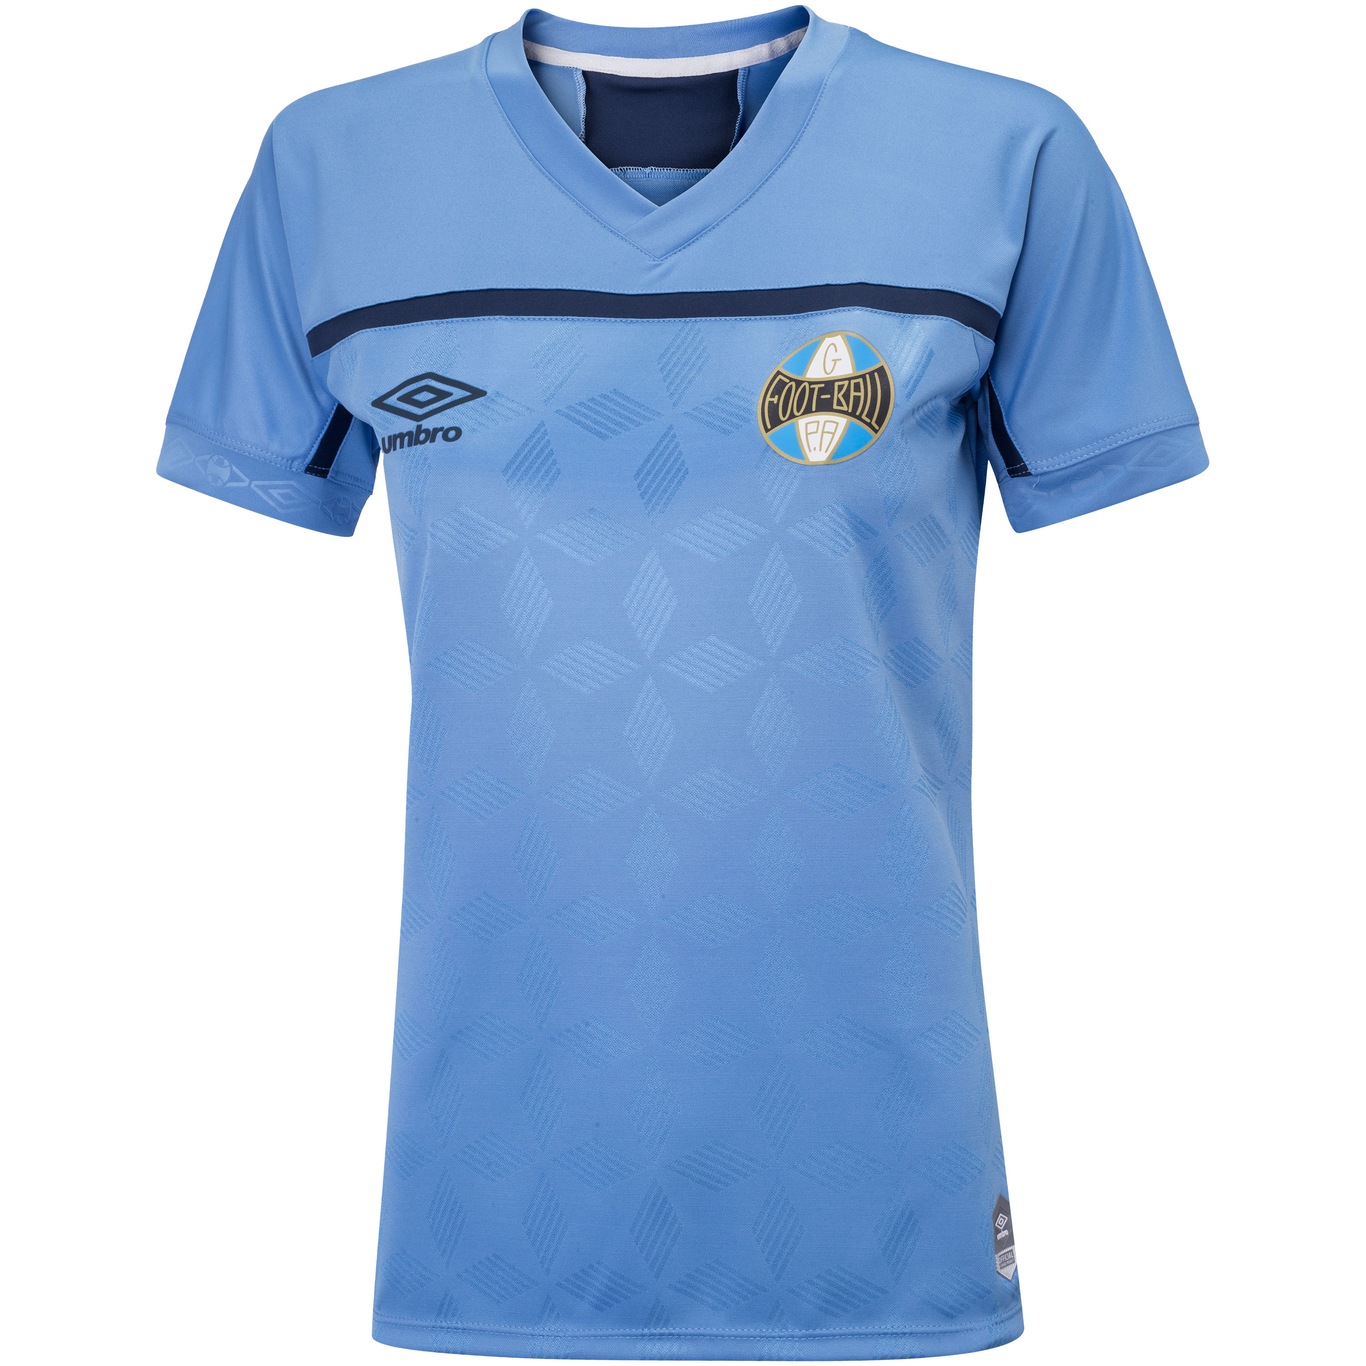 Camisa do Grêmio III 2020 Umbro - Feminina - Foto 1